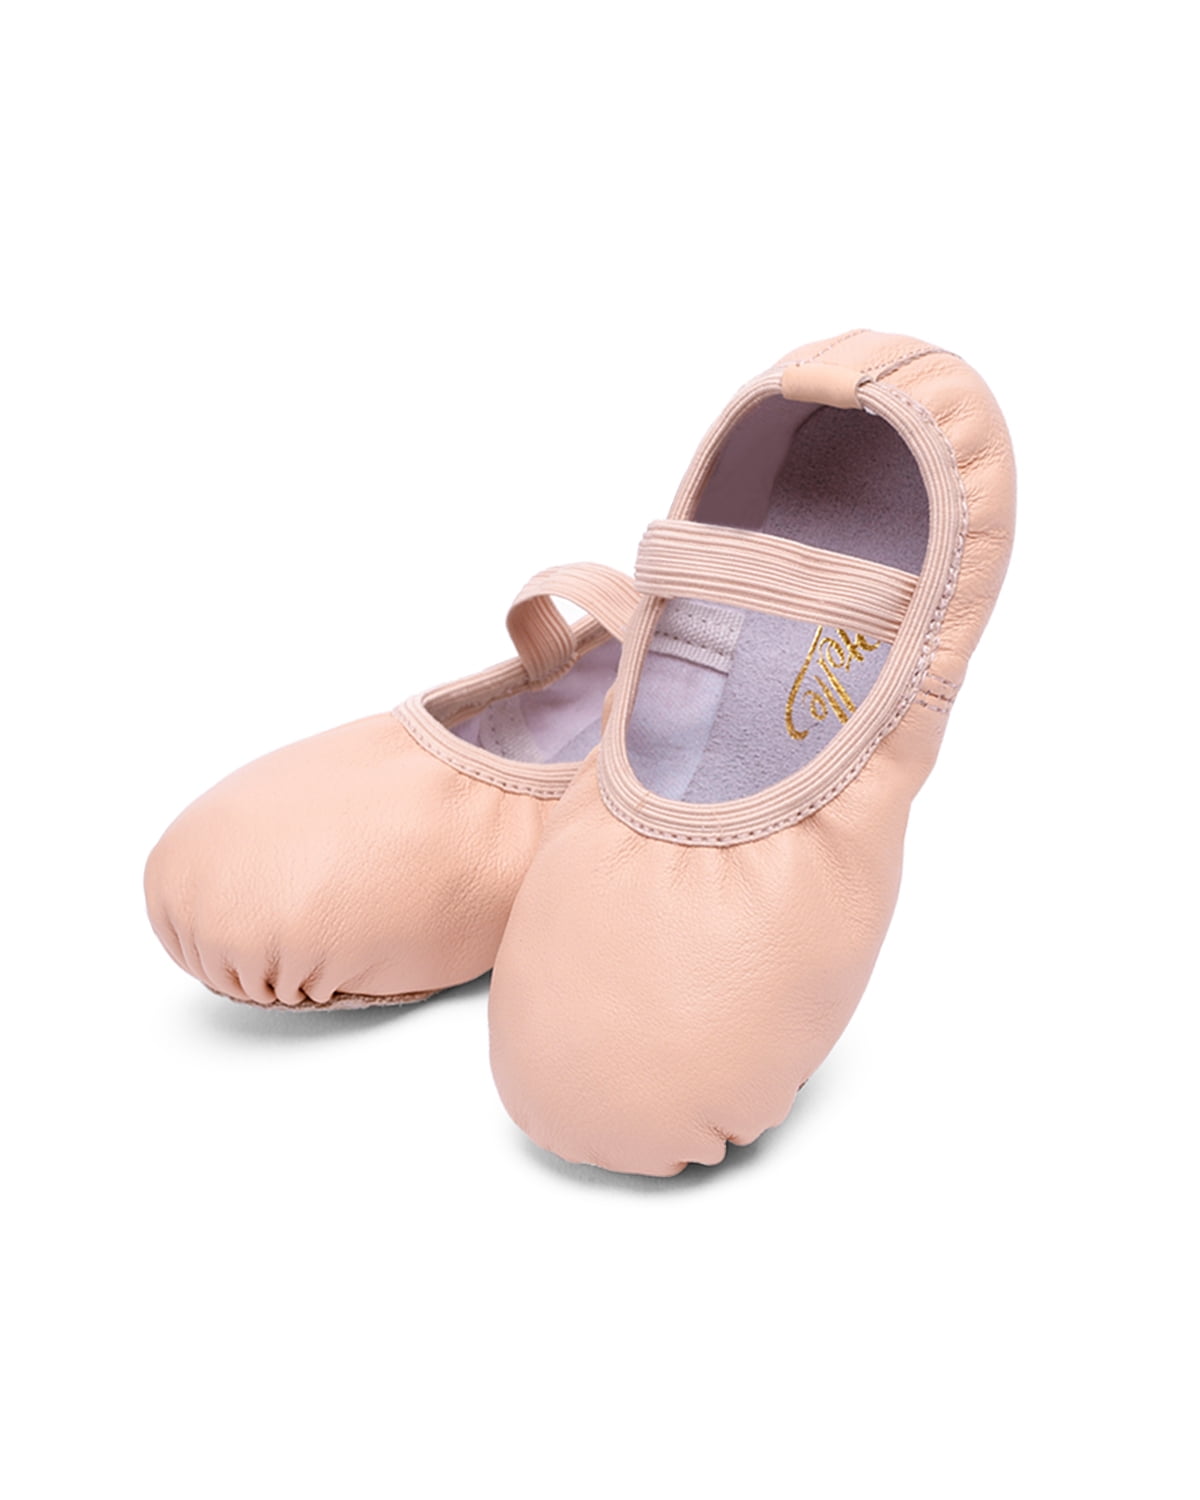 Toddler/Little Kid/Big Kid STELLE Premium Authentic Leather Ballet Slipper/Ballet Shoes 